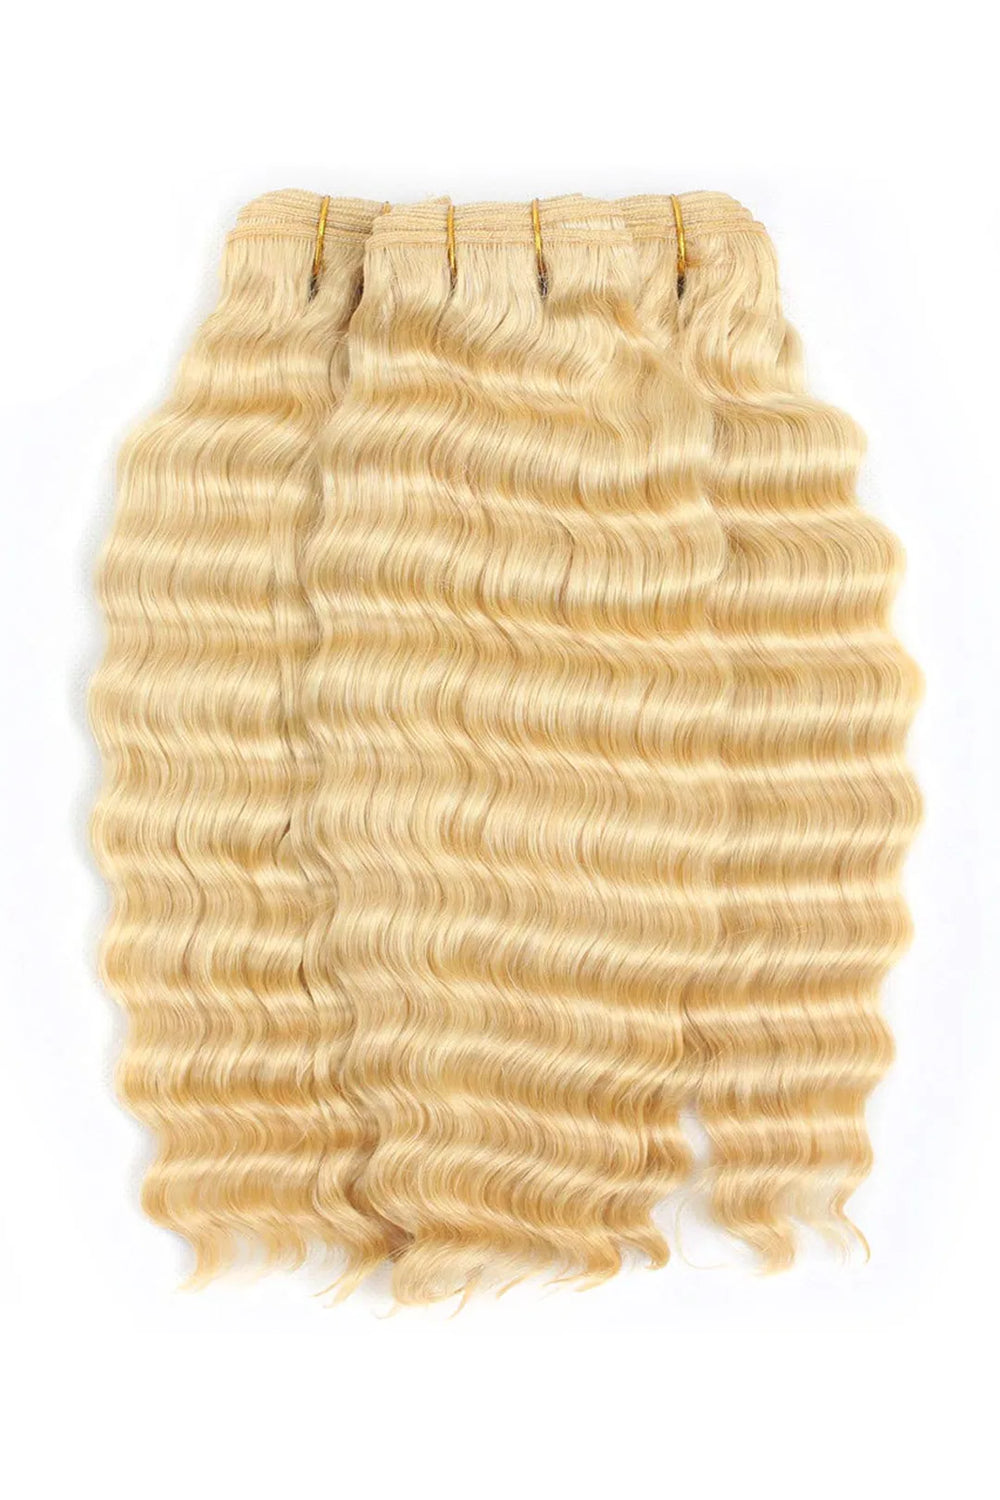 613 Blonde Deep Wave Bundle Double Weft Sew-in Extensions Virgin Hair 2